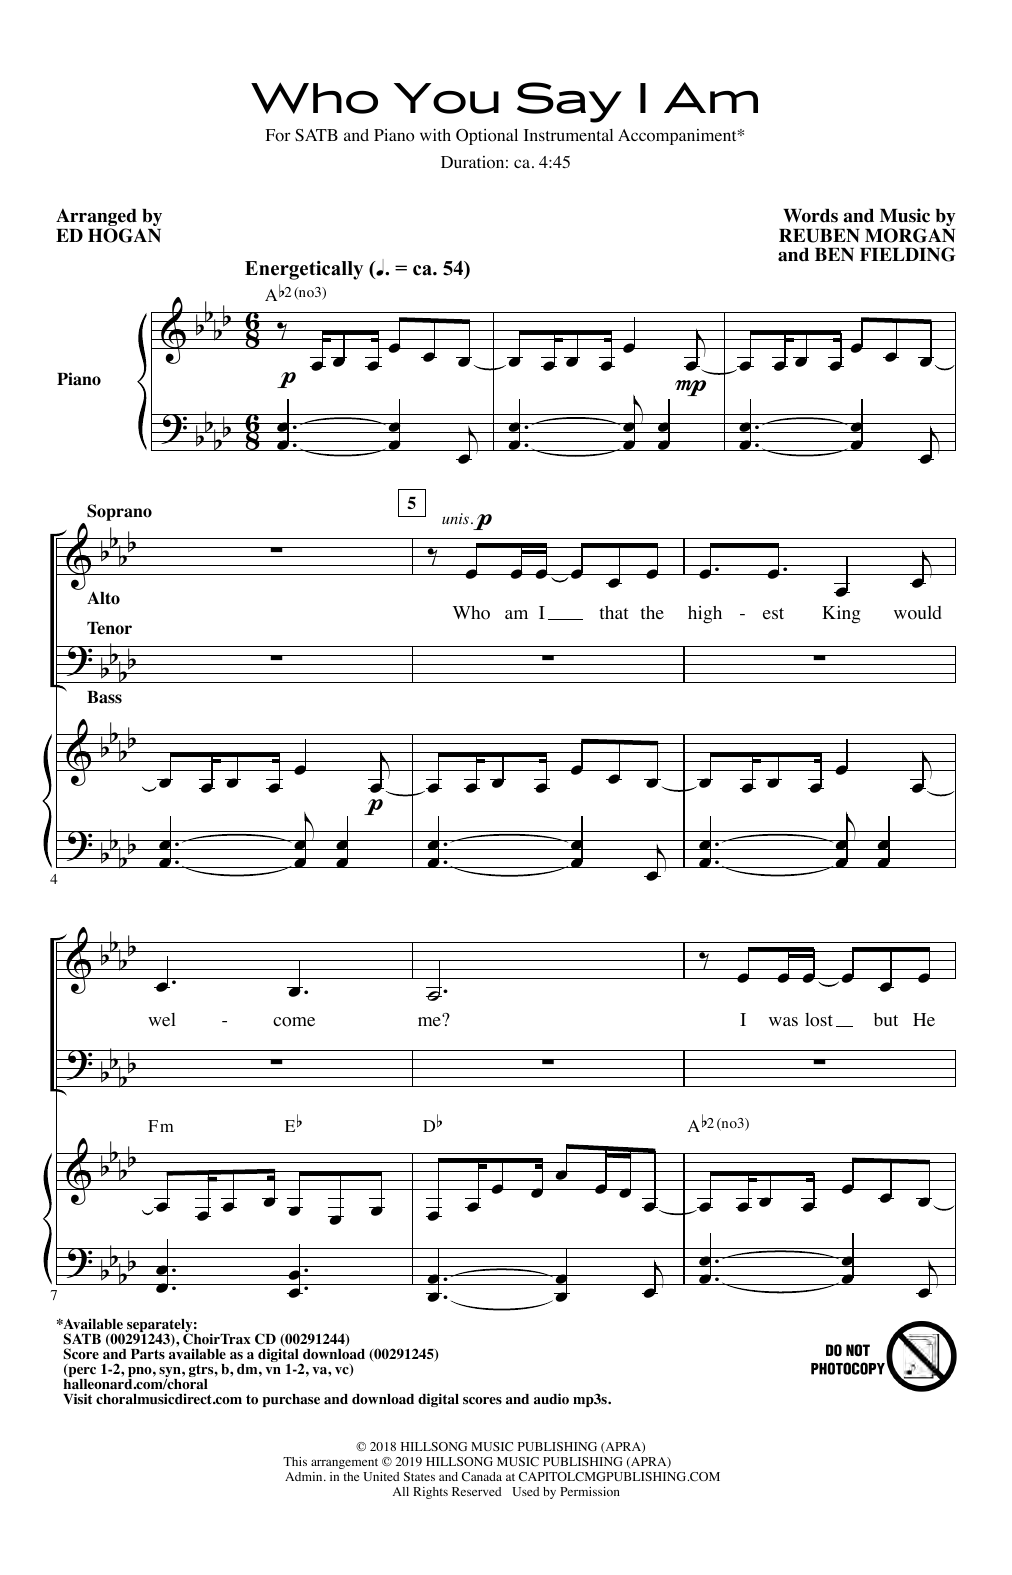 Hillsong Worship Who You Say I Am (arr. Ed Hogan) Sheet Music Notes & Chords for SATB Choir - Download or Print PDF